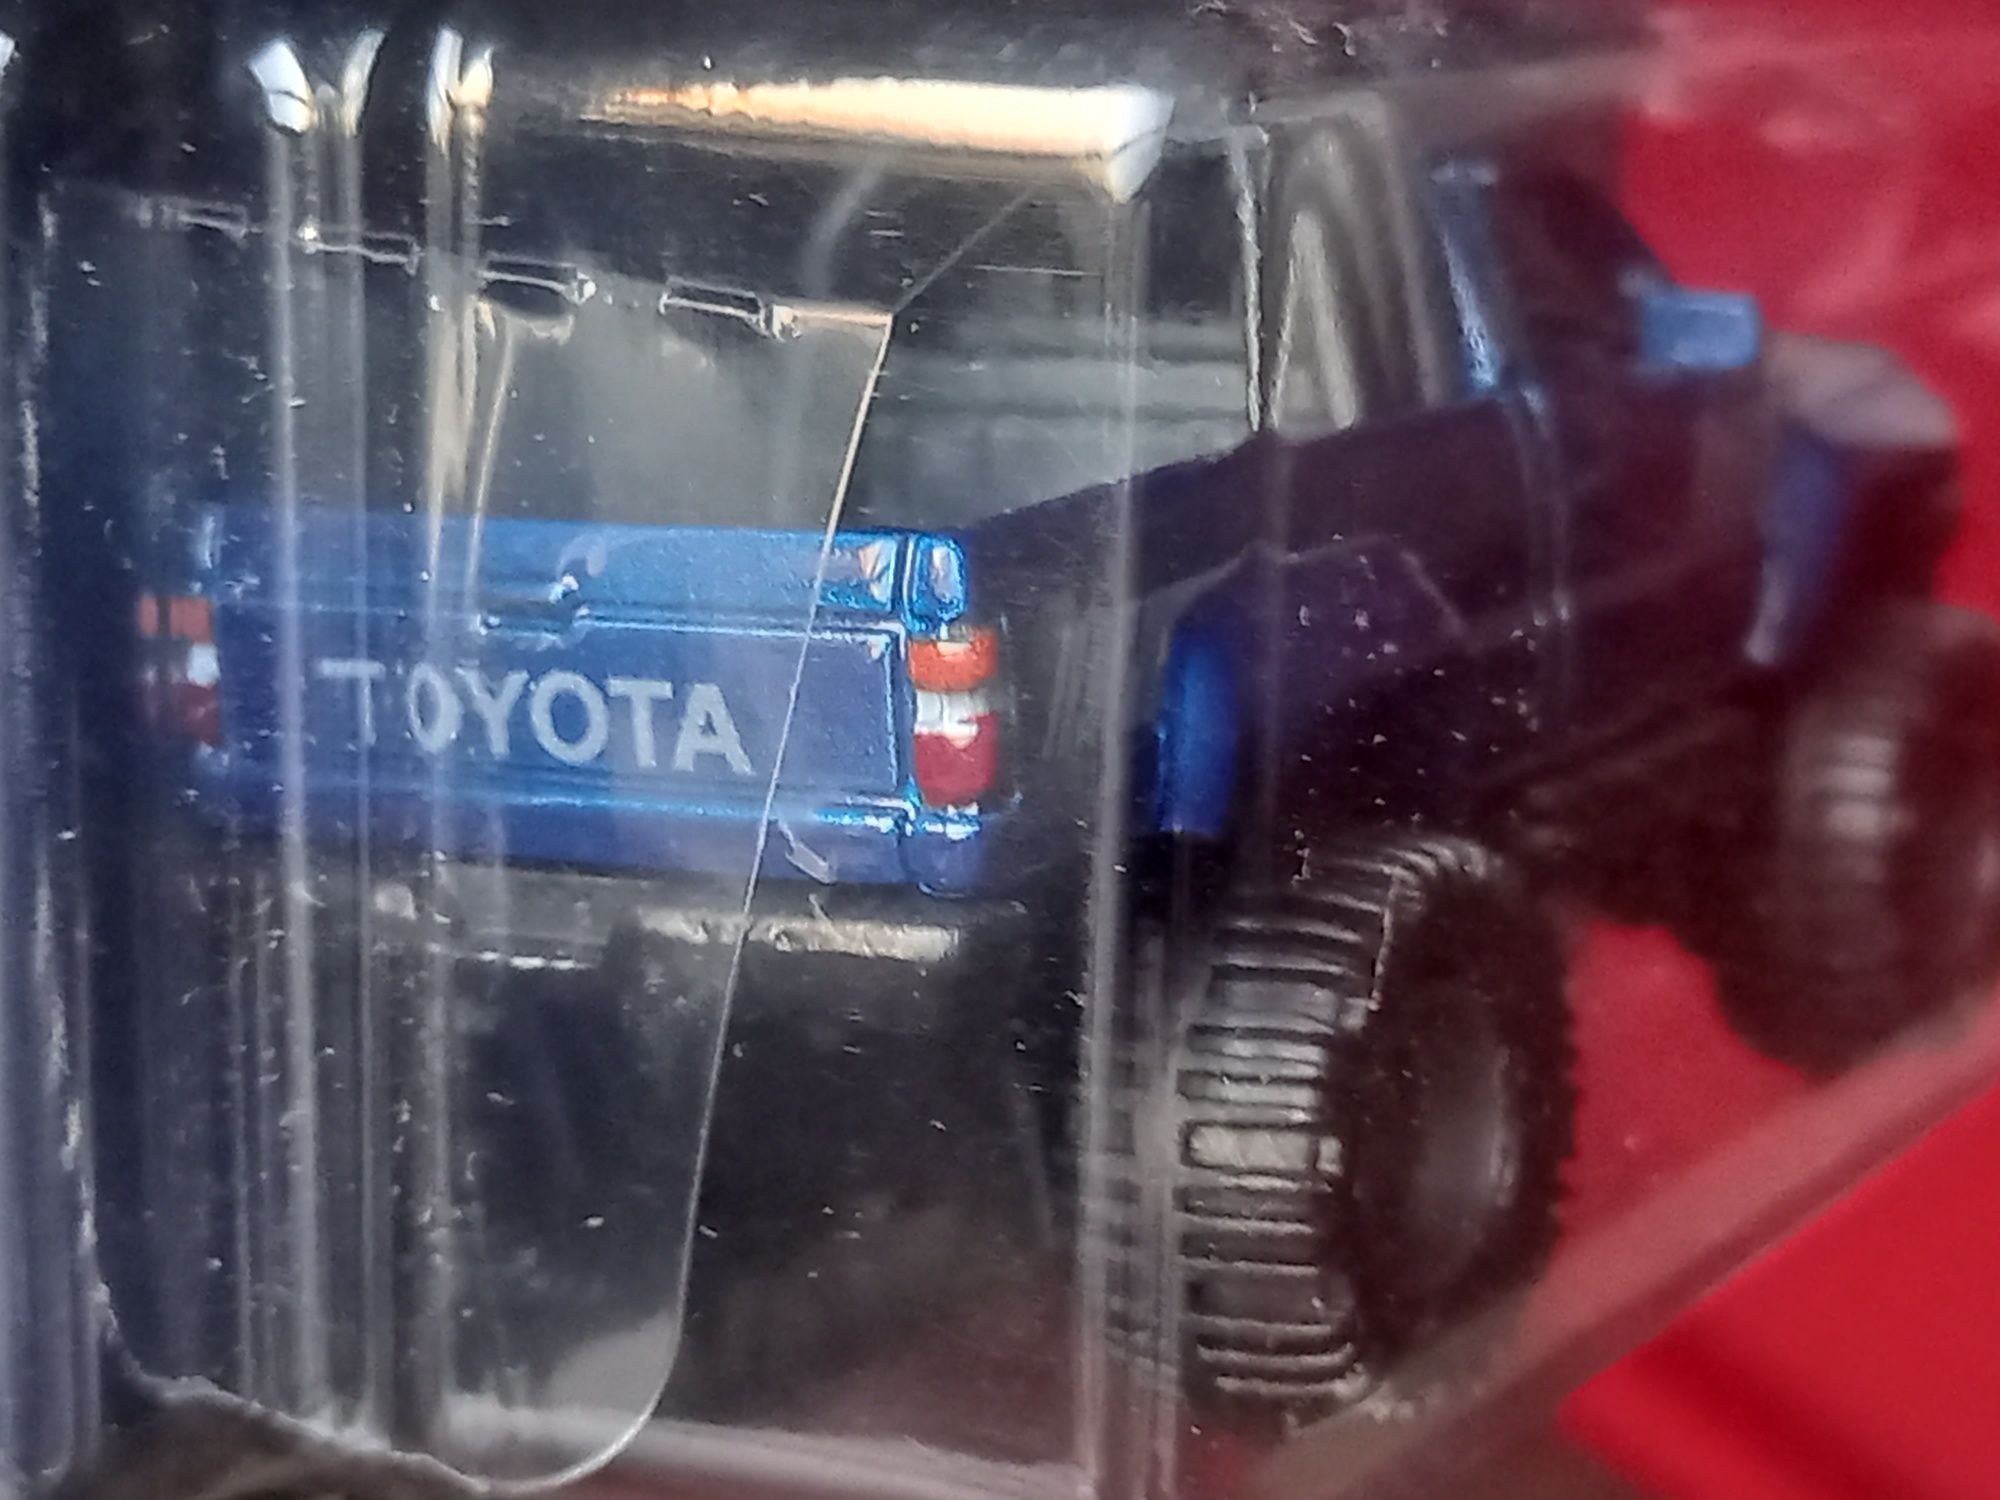 87 toyota pickup truck hot wheels rodas borracha